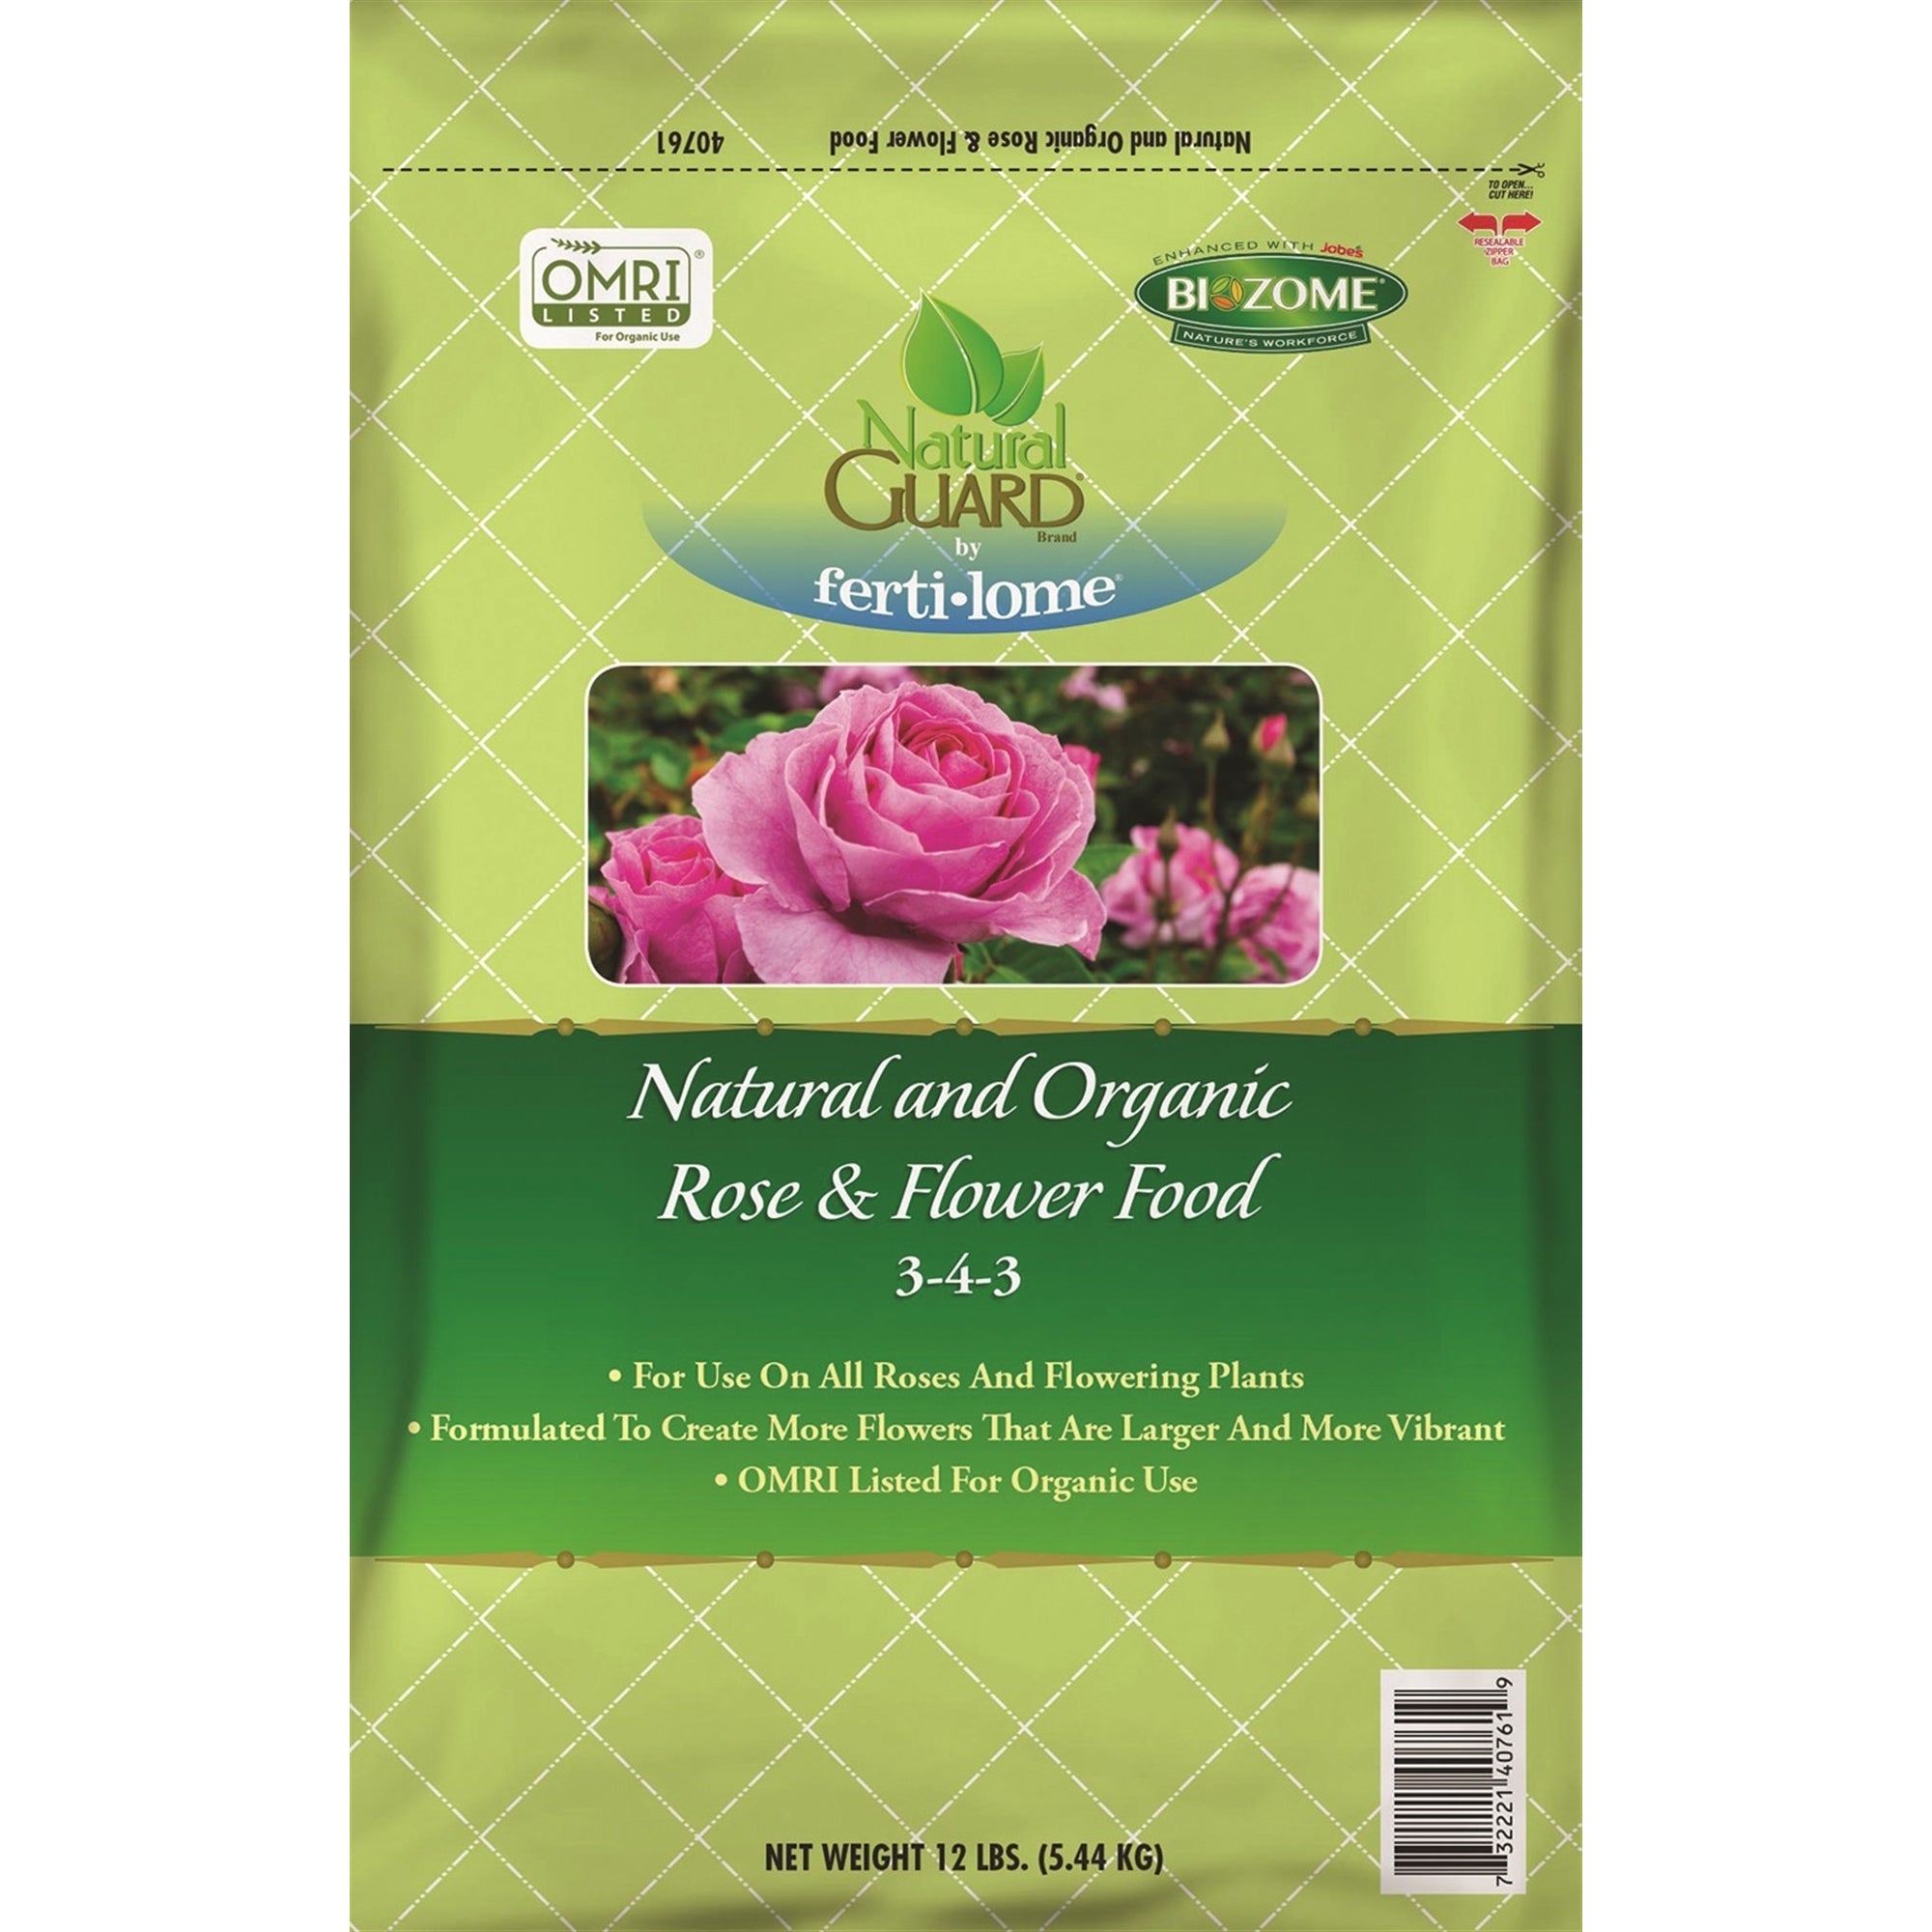 Fertilome Natural Guard Natural and Organic Rose and Flower Food 3-4-3